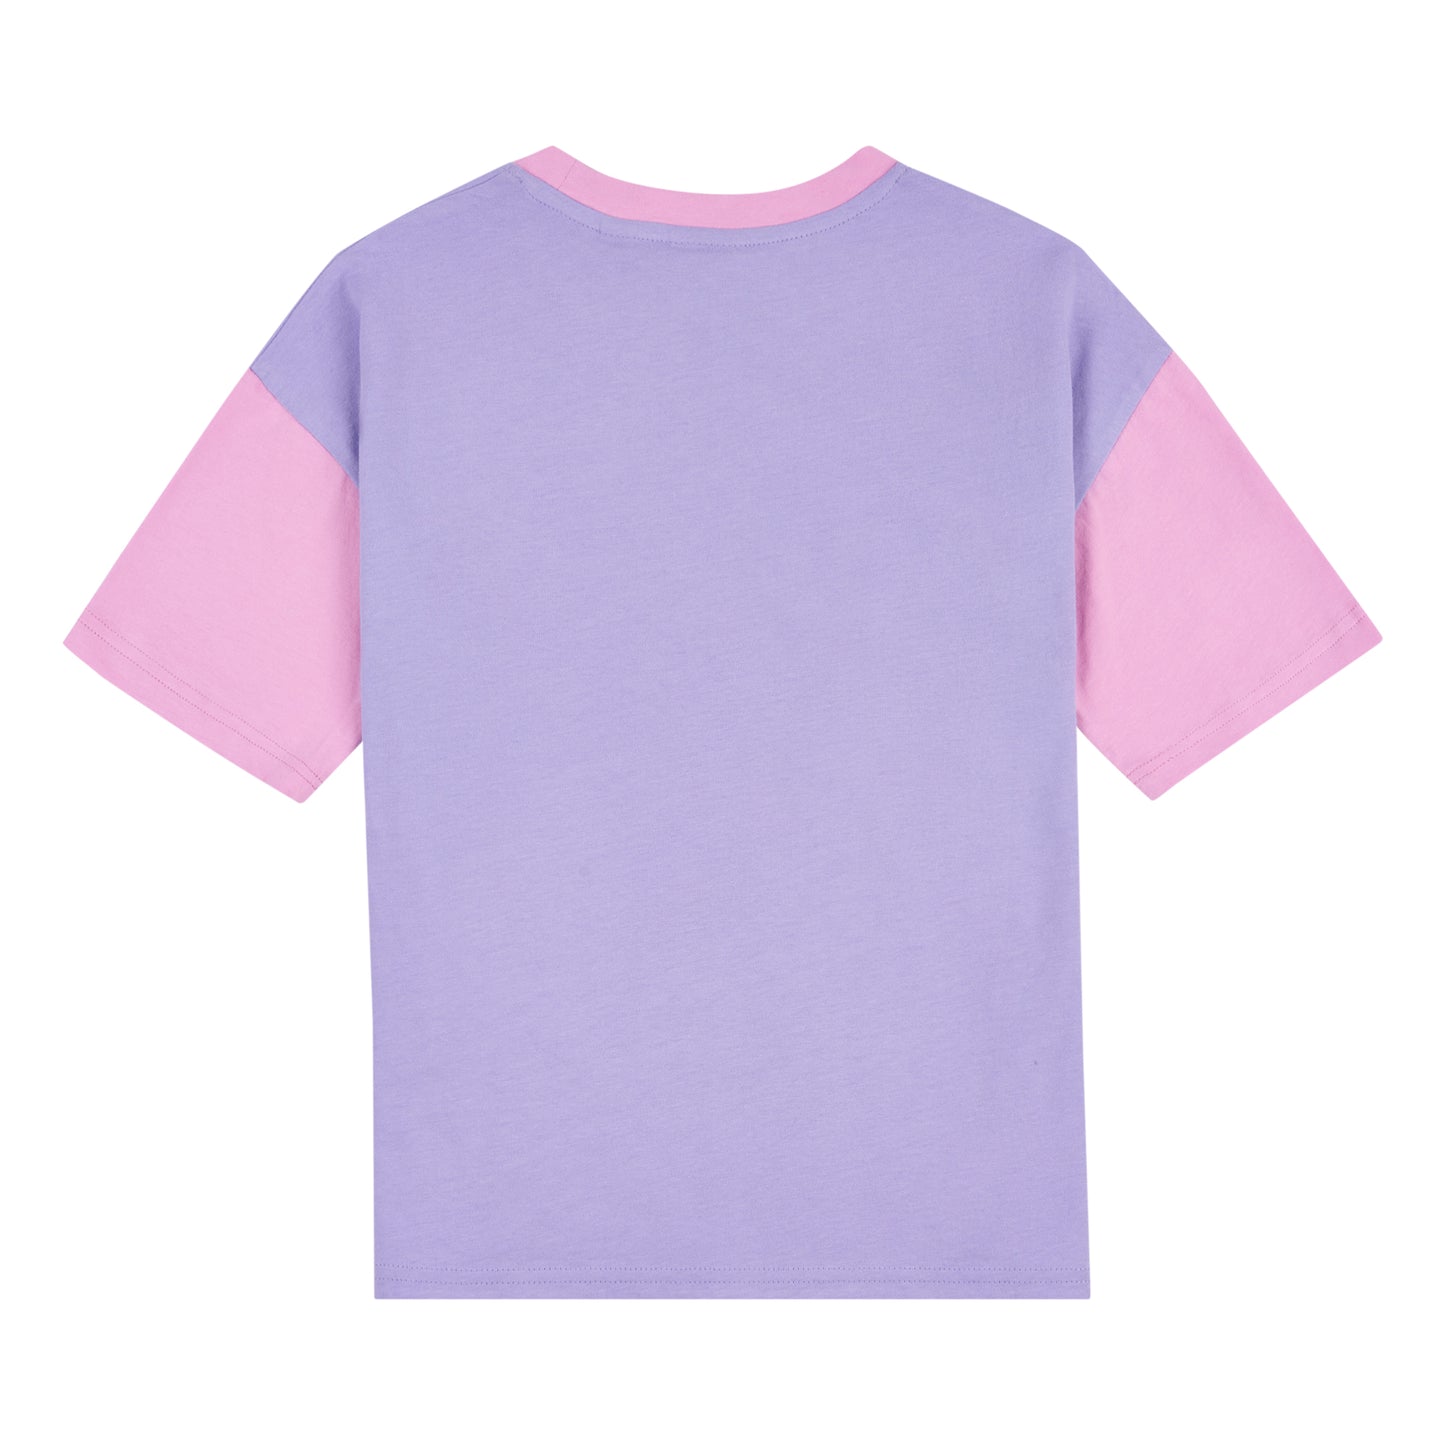 Franklin & Marshall Girls Colour Block Oversized T-Shirt FMS5011D02